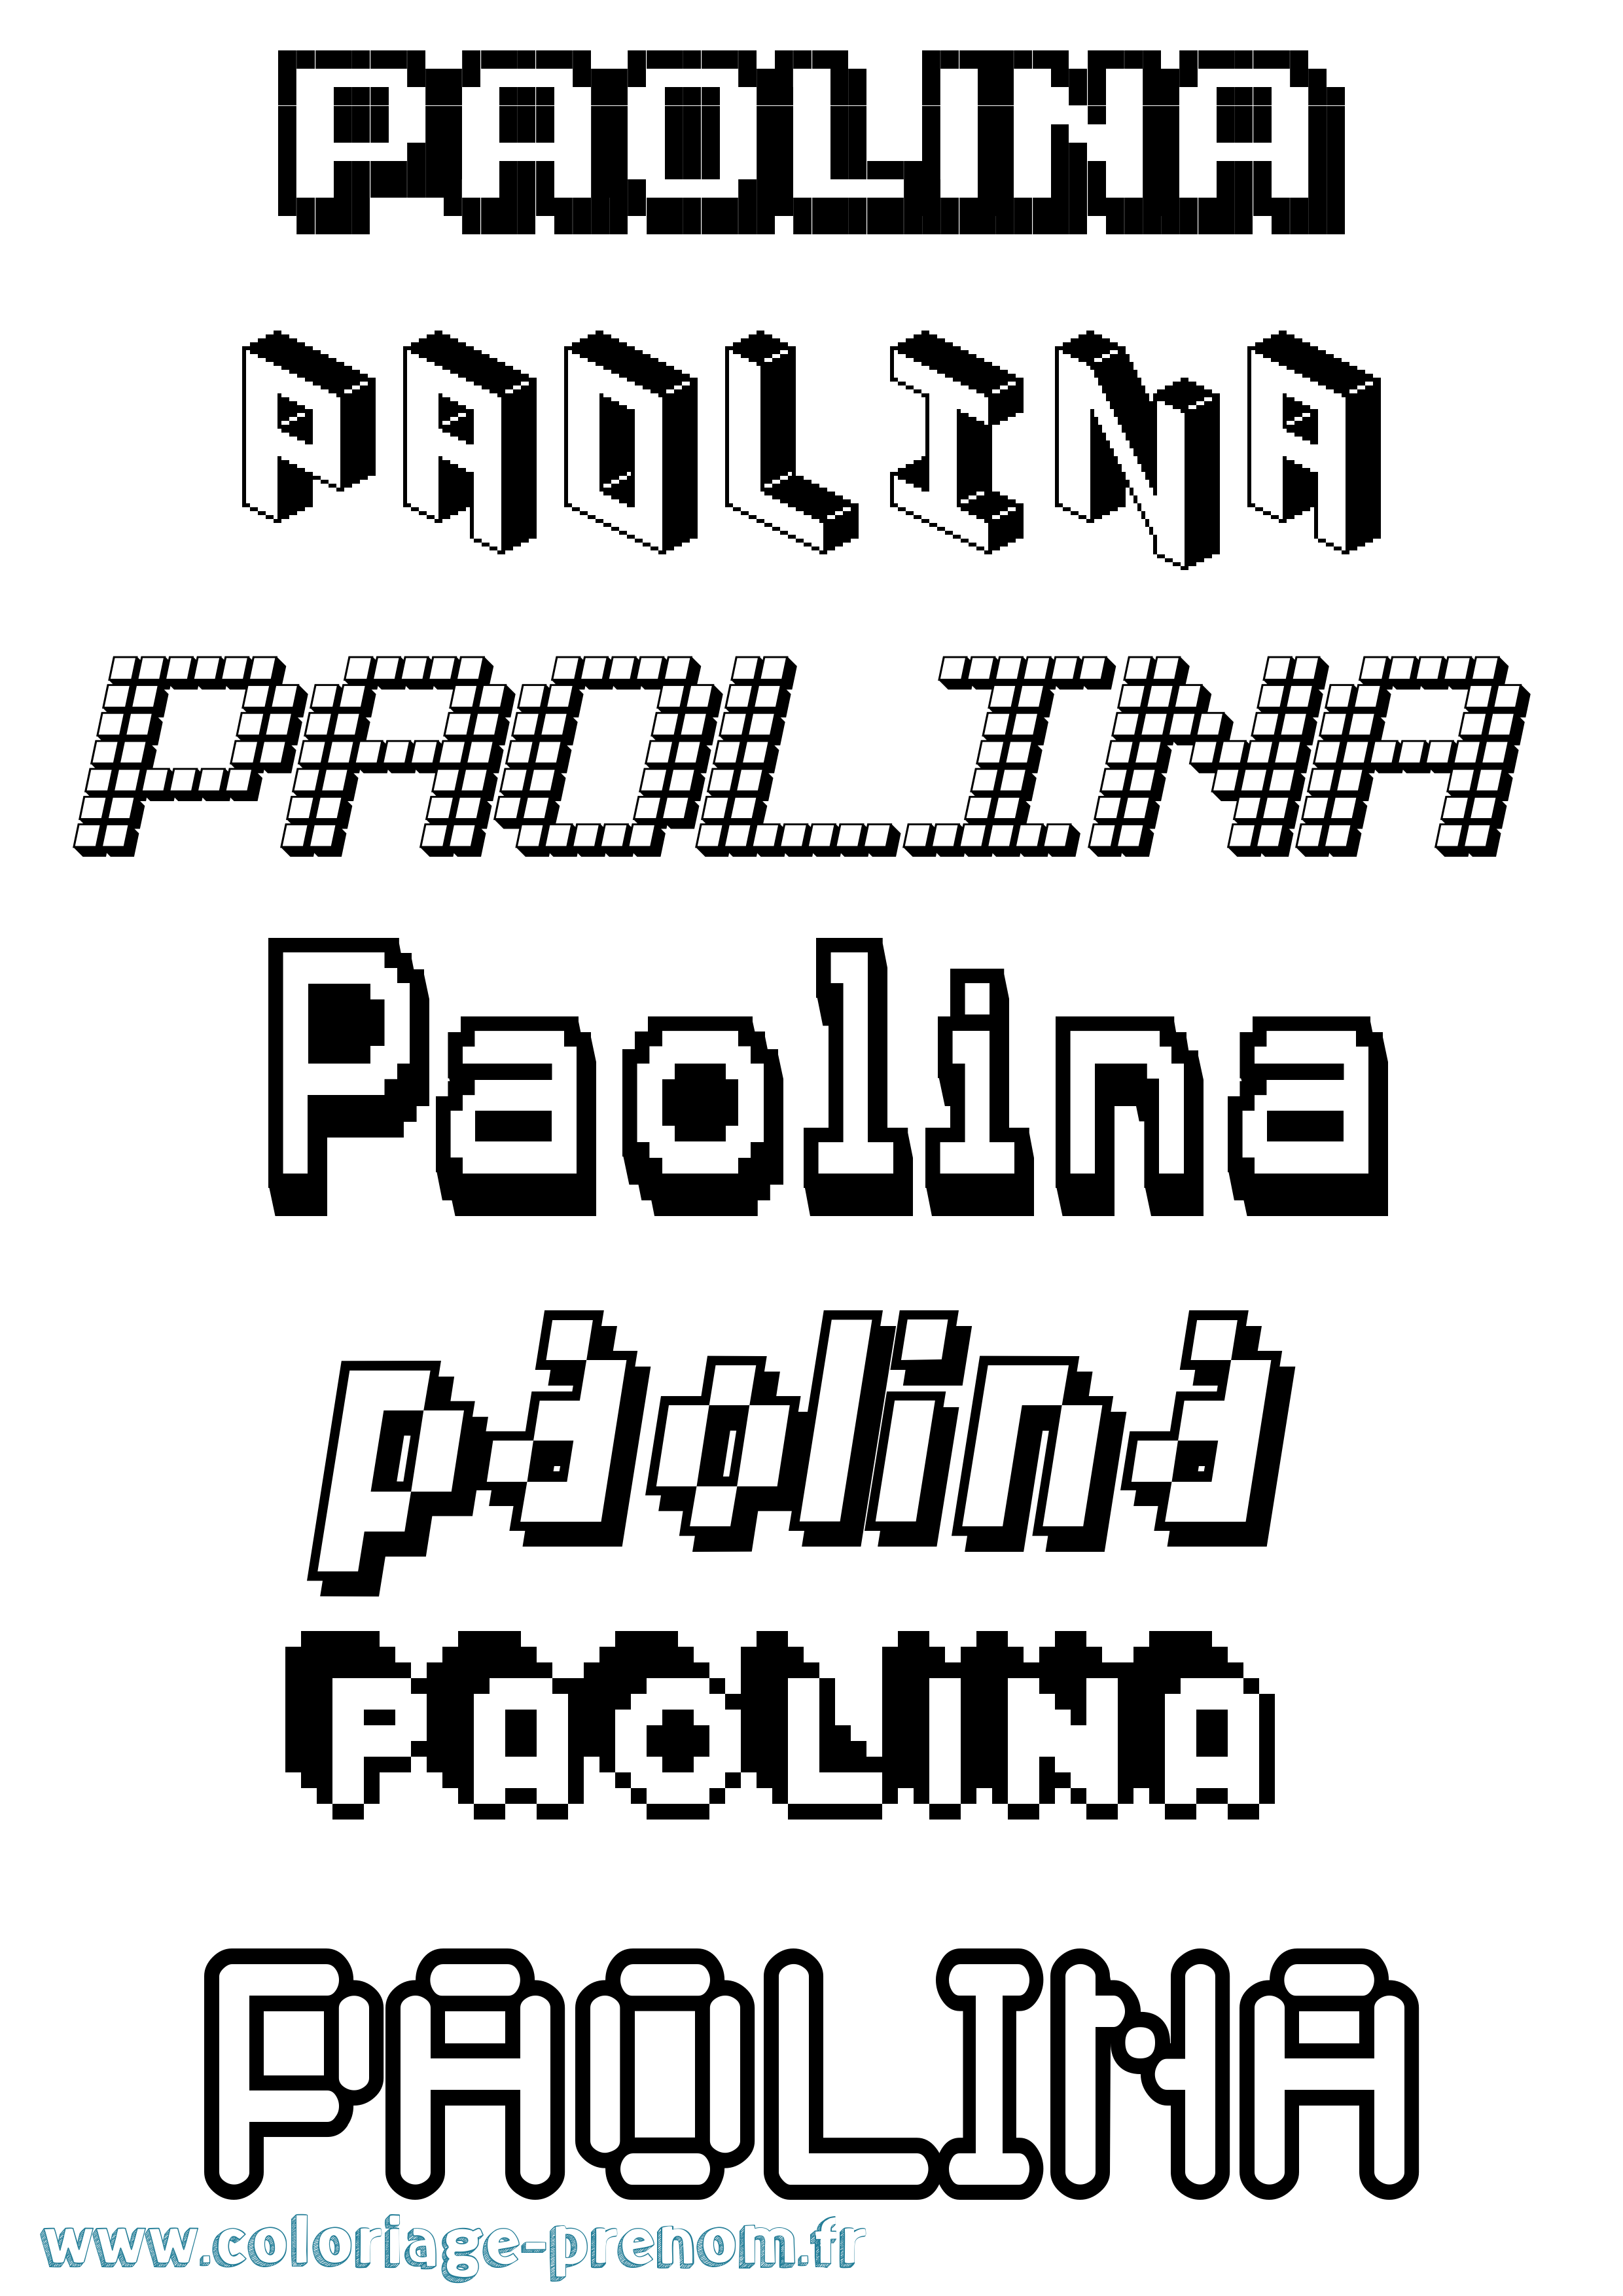 Coloriage prénom Paolina Pixel